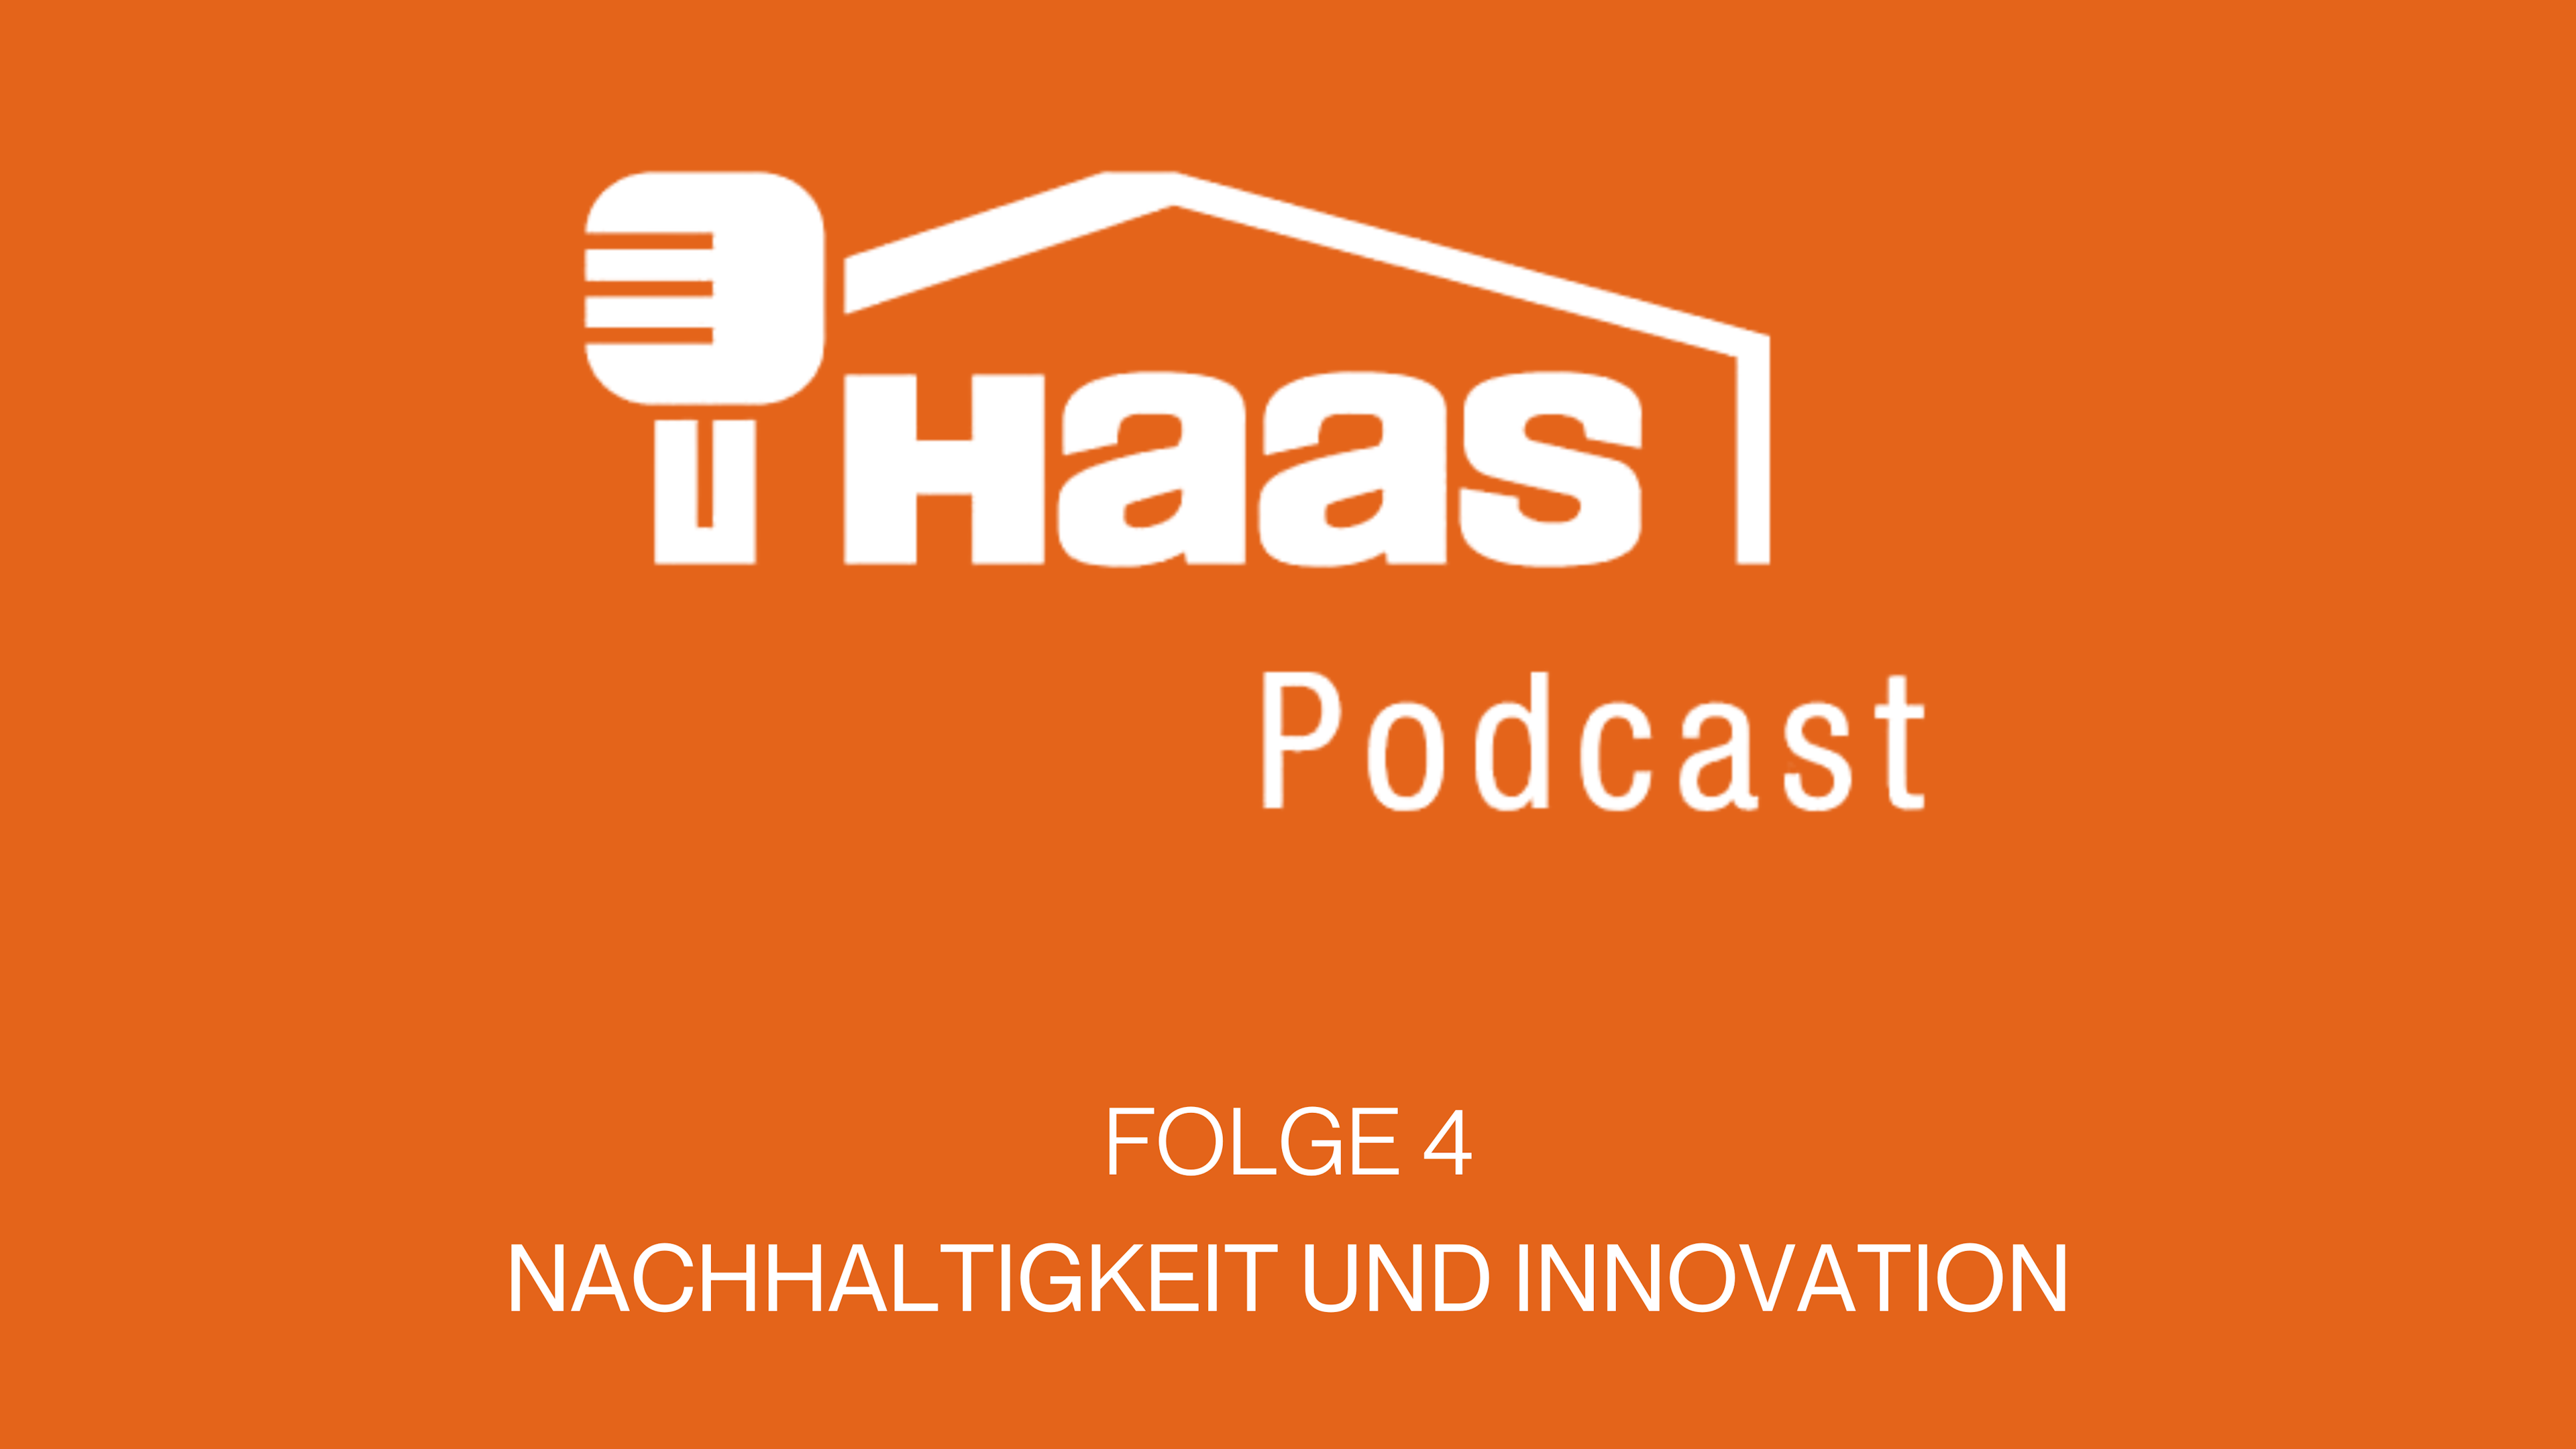 Haas Fertigbau Podcast aus einem Holz geschnitzt Folge 4